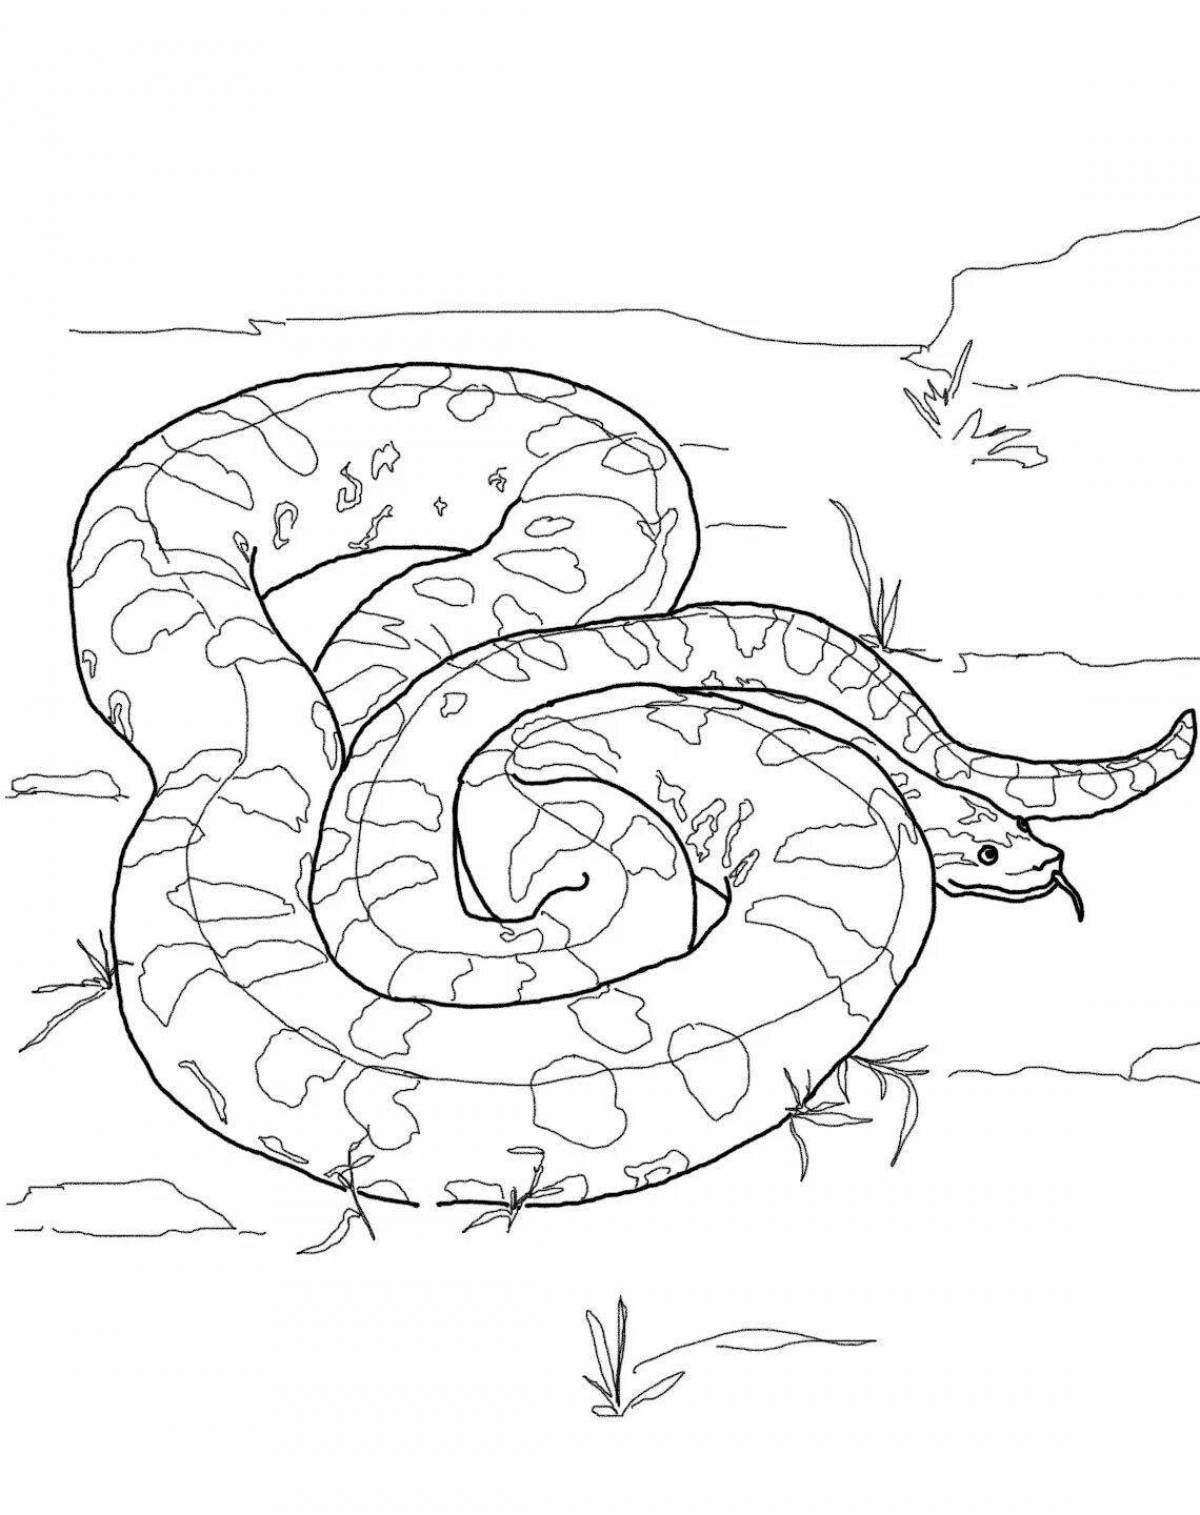 Anaconda live coloring